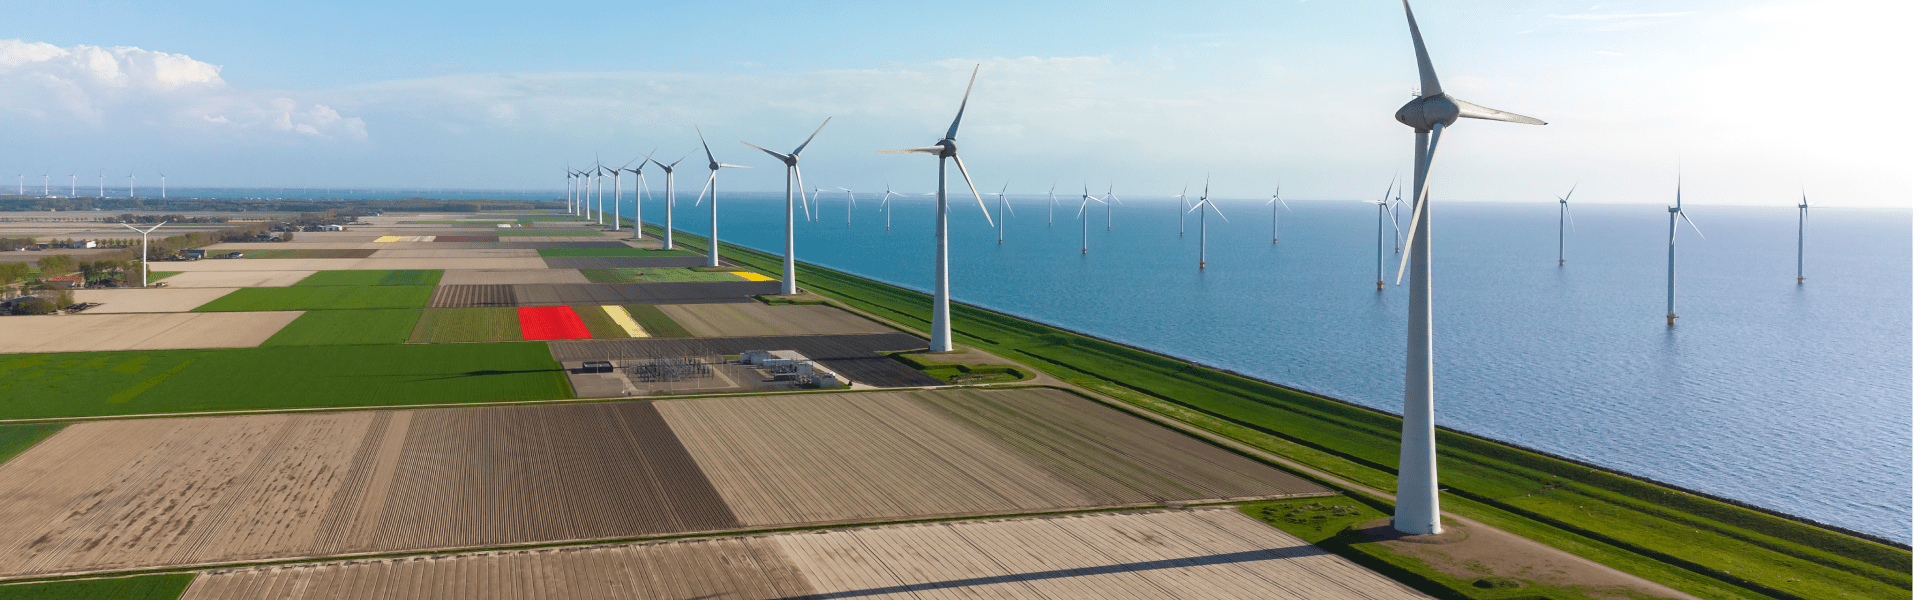 Renewable energy using wind turbines